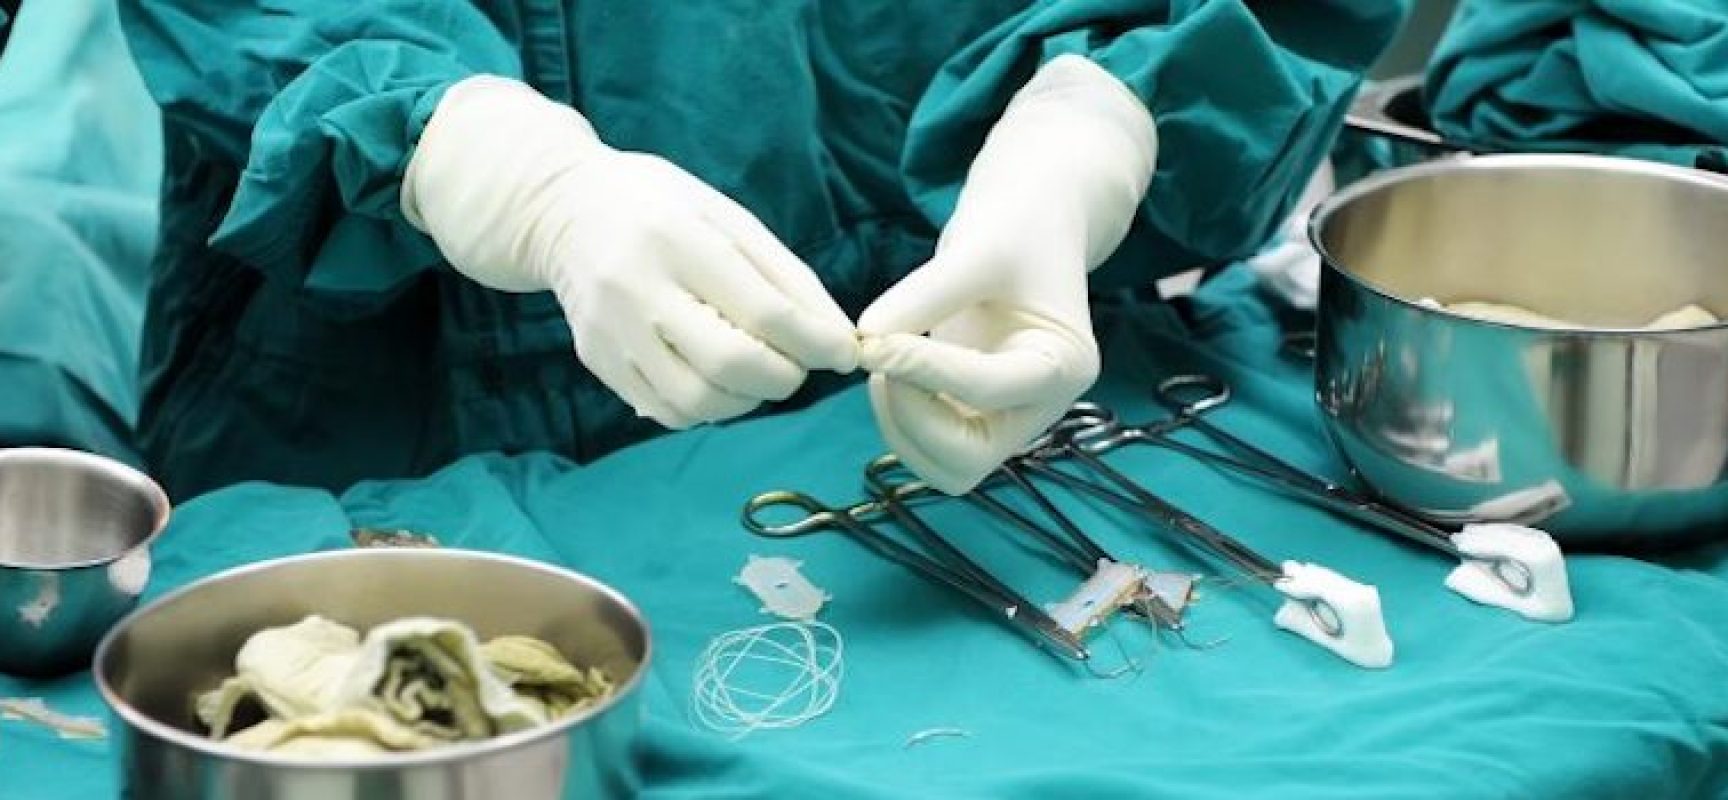 Eseguita autopsia su corpo di Lucrezia Mastrodonato: necessari ulteriori esami